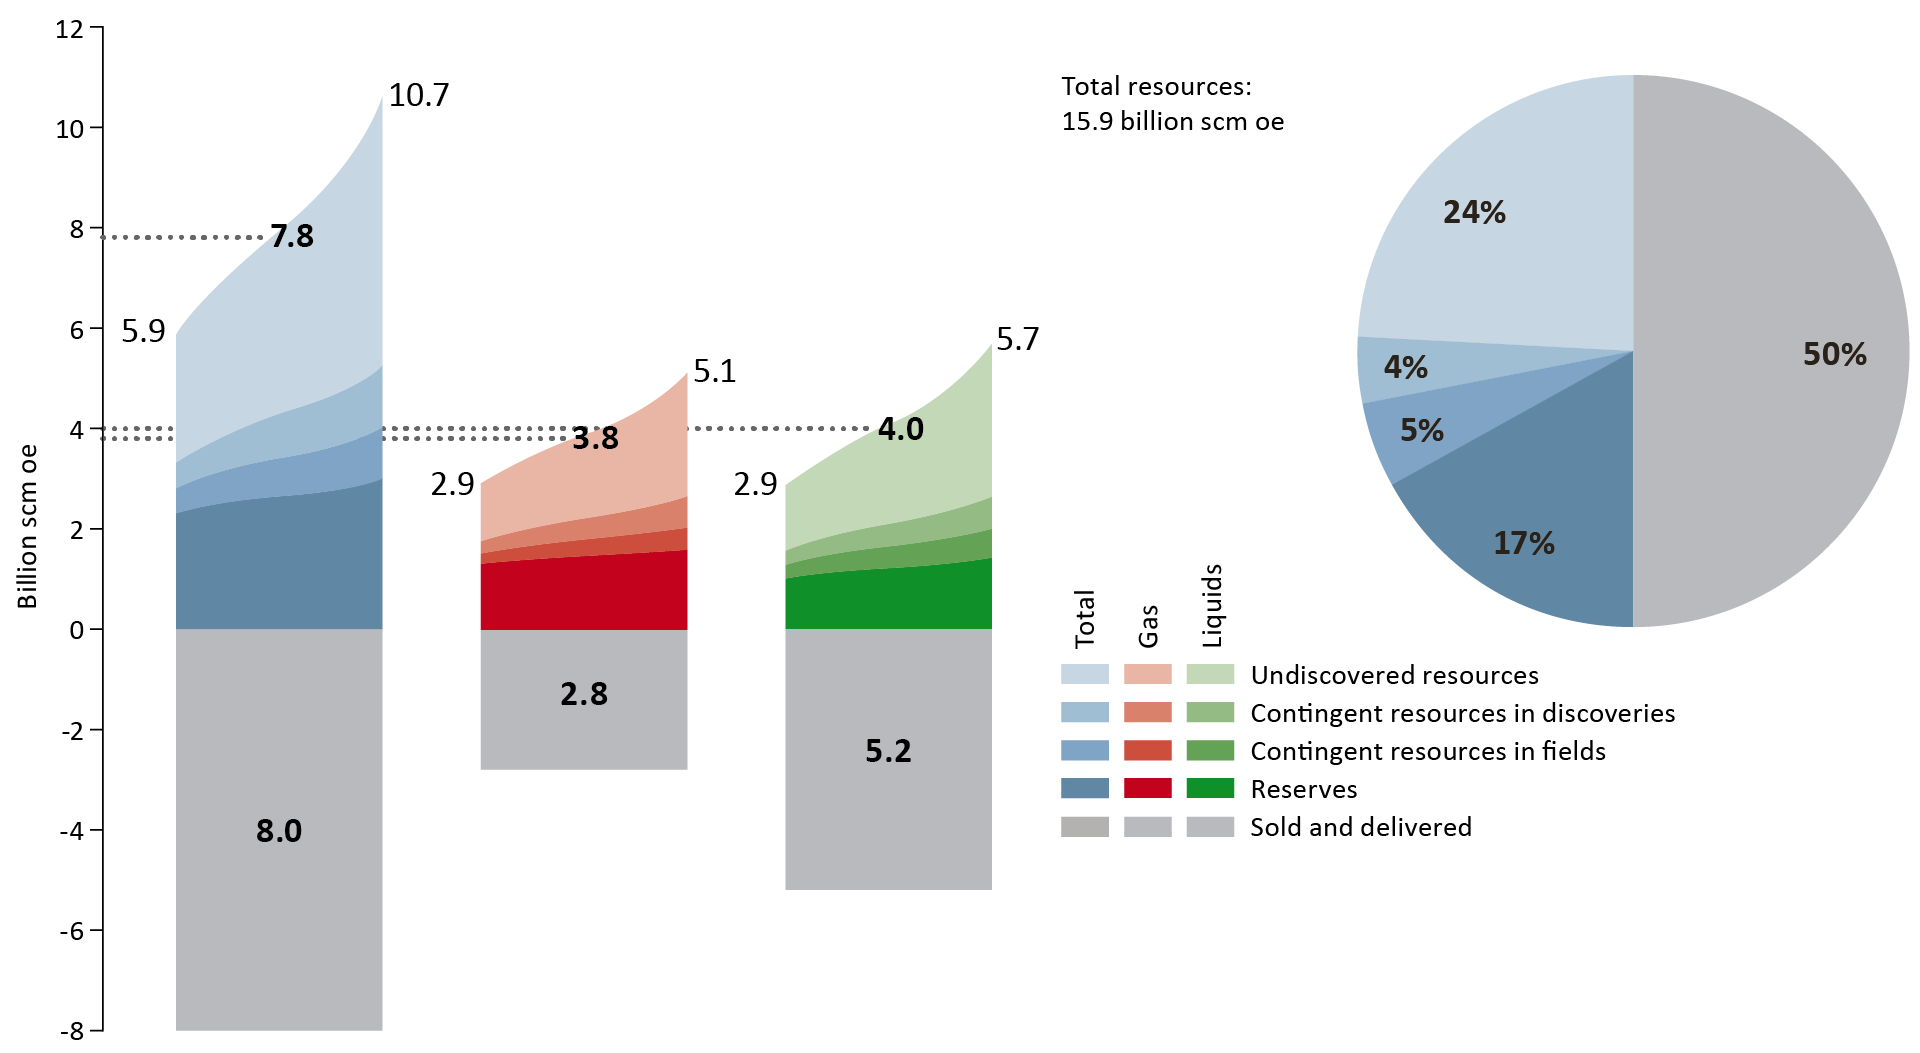 Figure 1-1 Petroleum resources and uncertainty in the estimates as per 31 Dec. 2021.